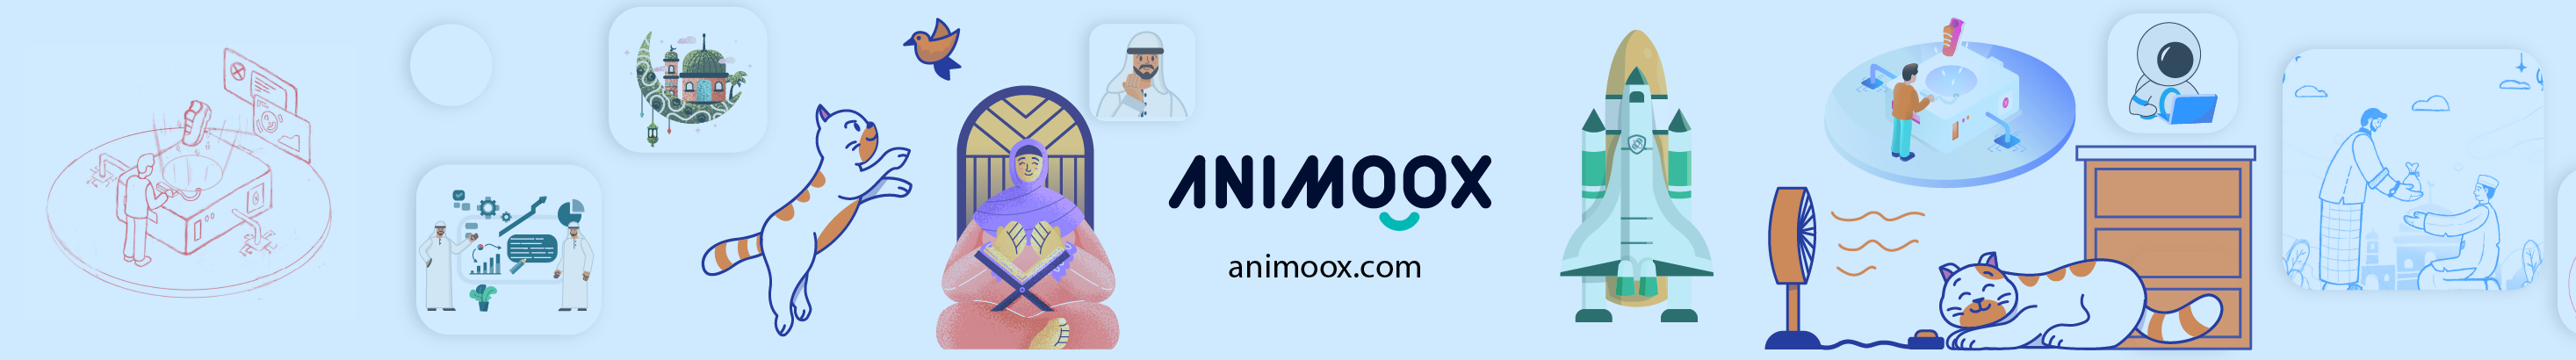 Animoox Studio's profile banner